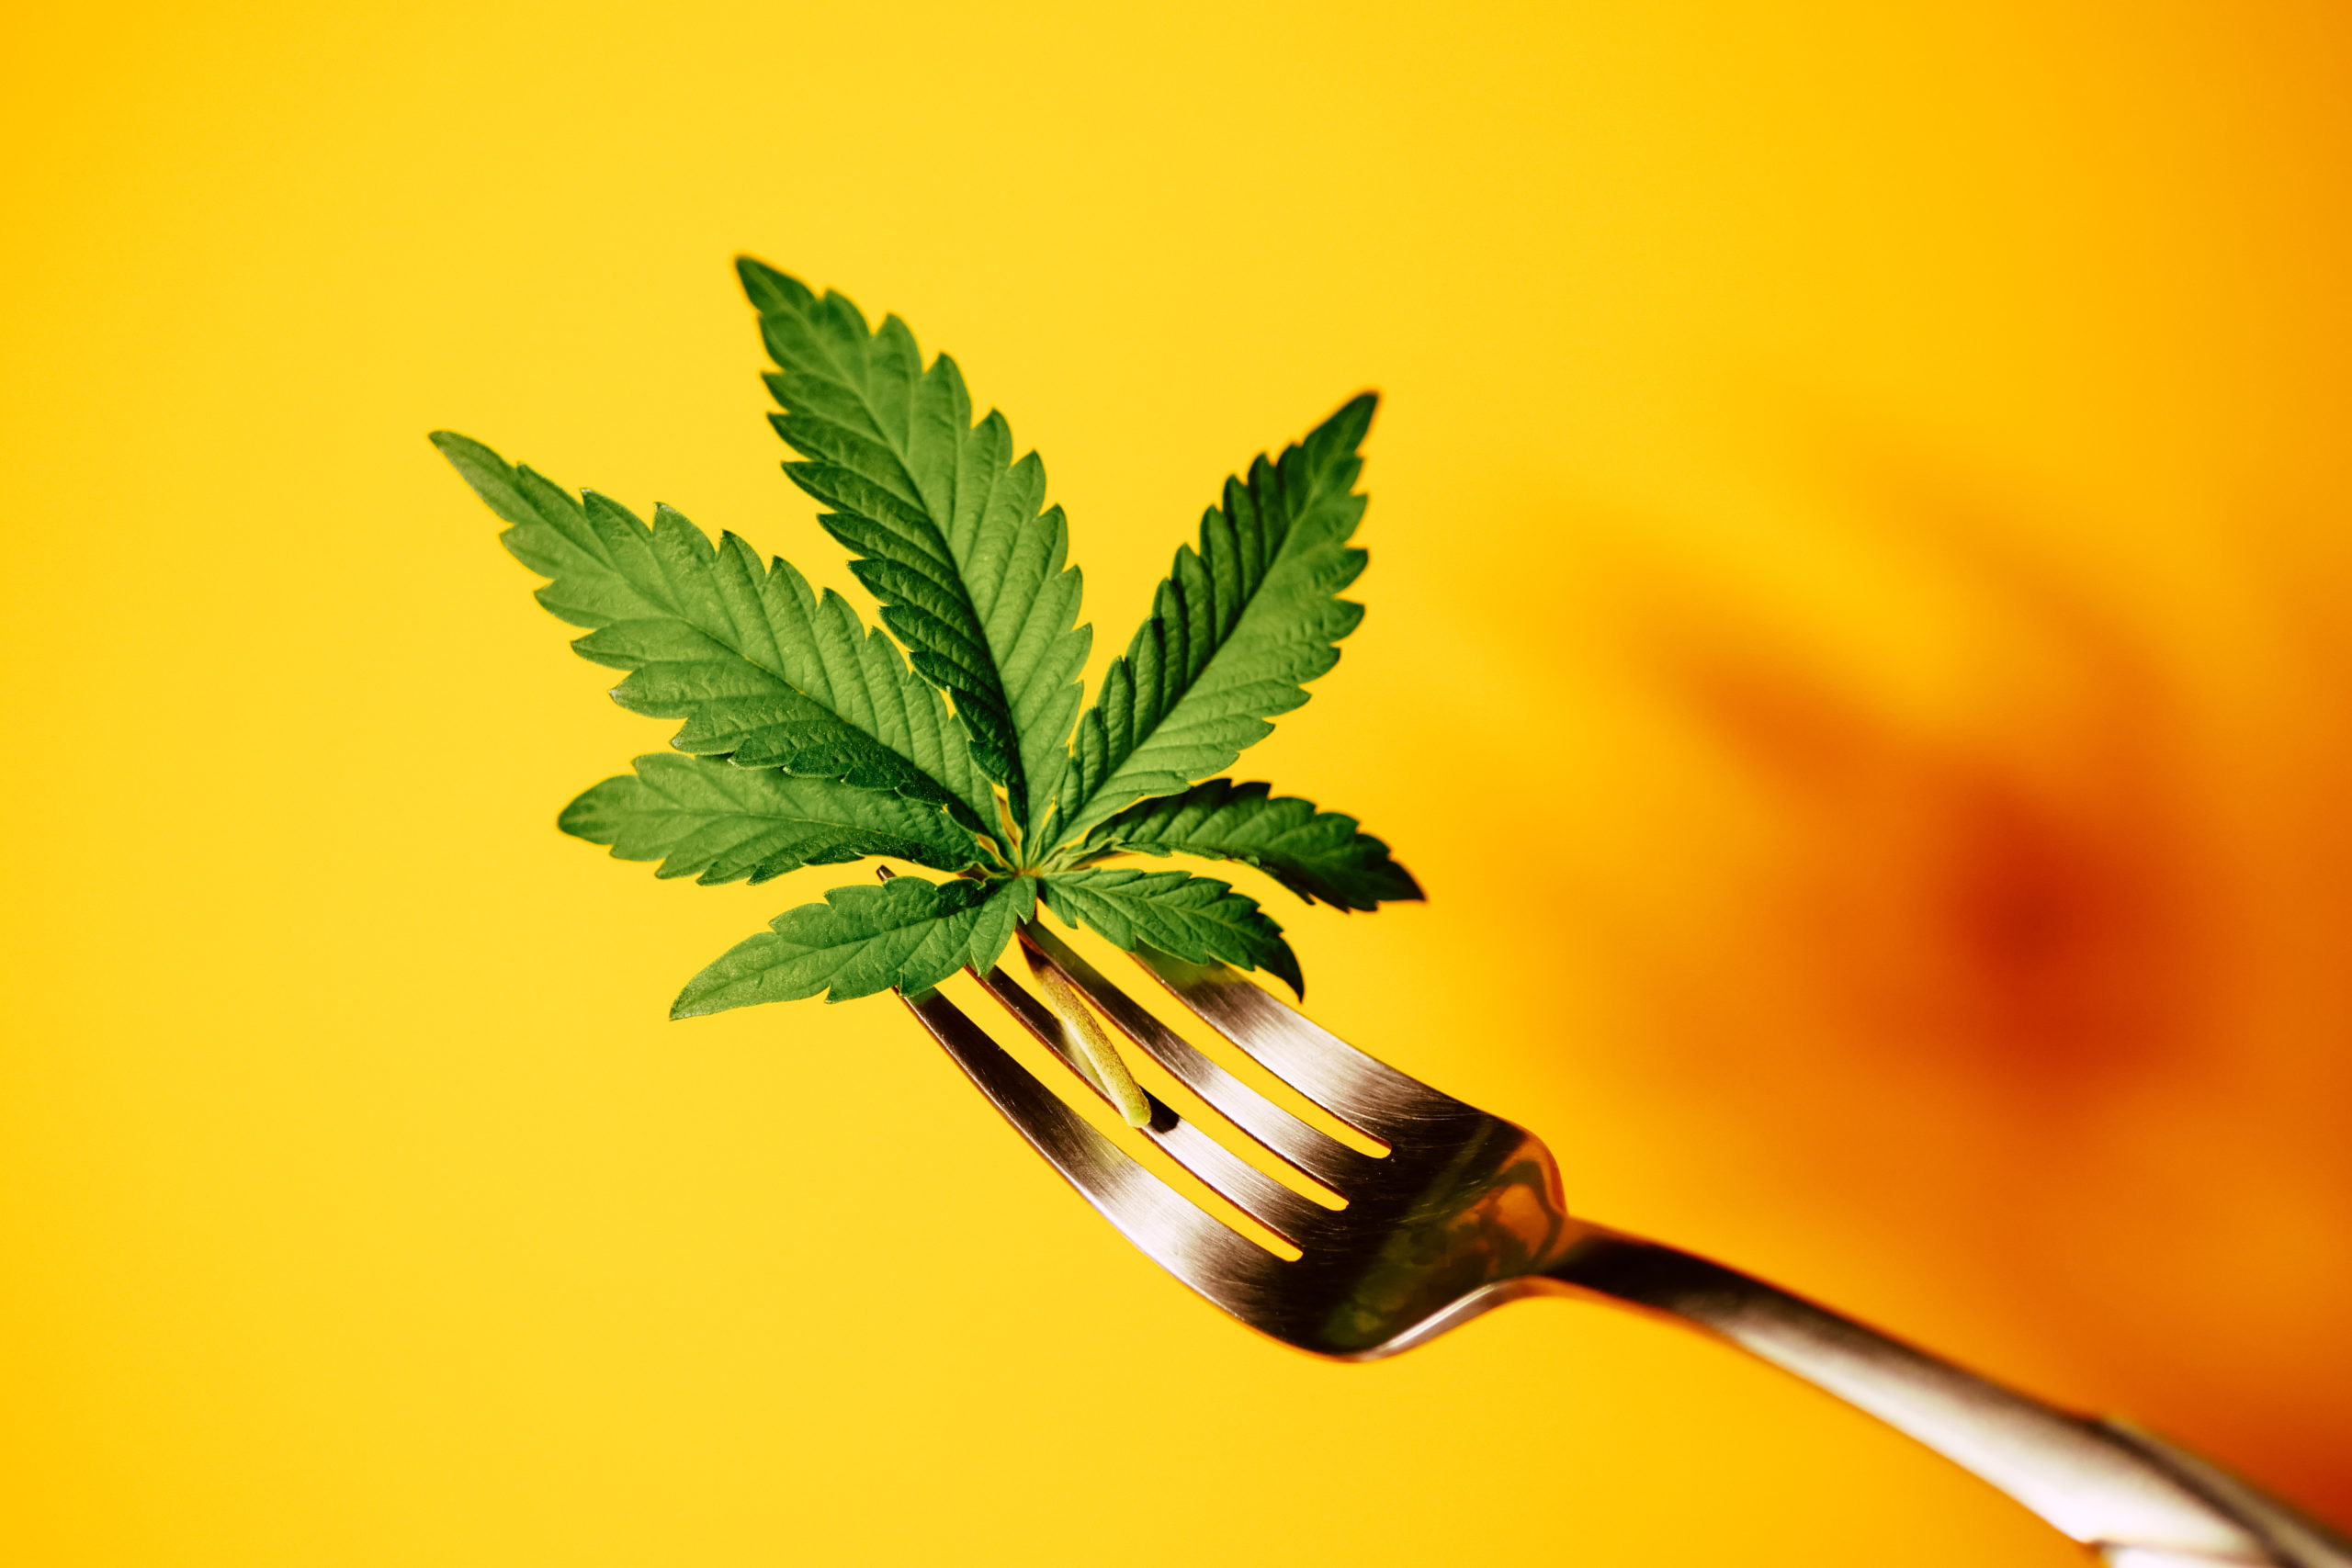 A fork with a cannabis plant